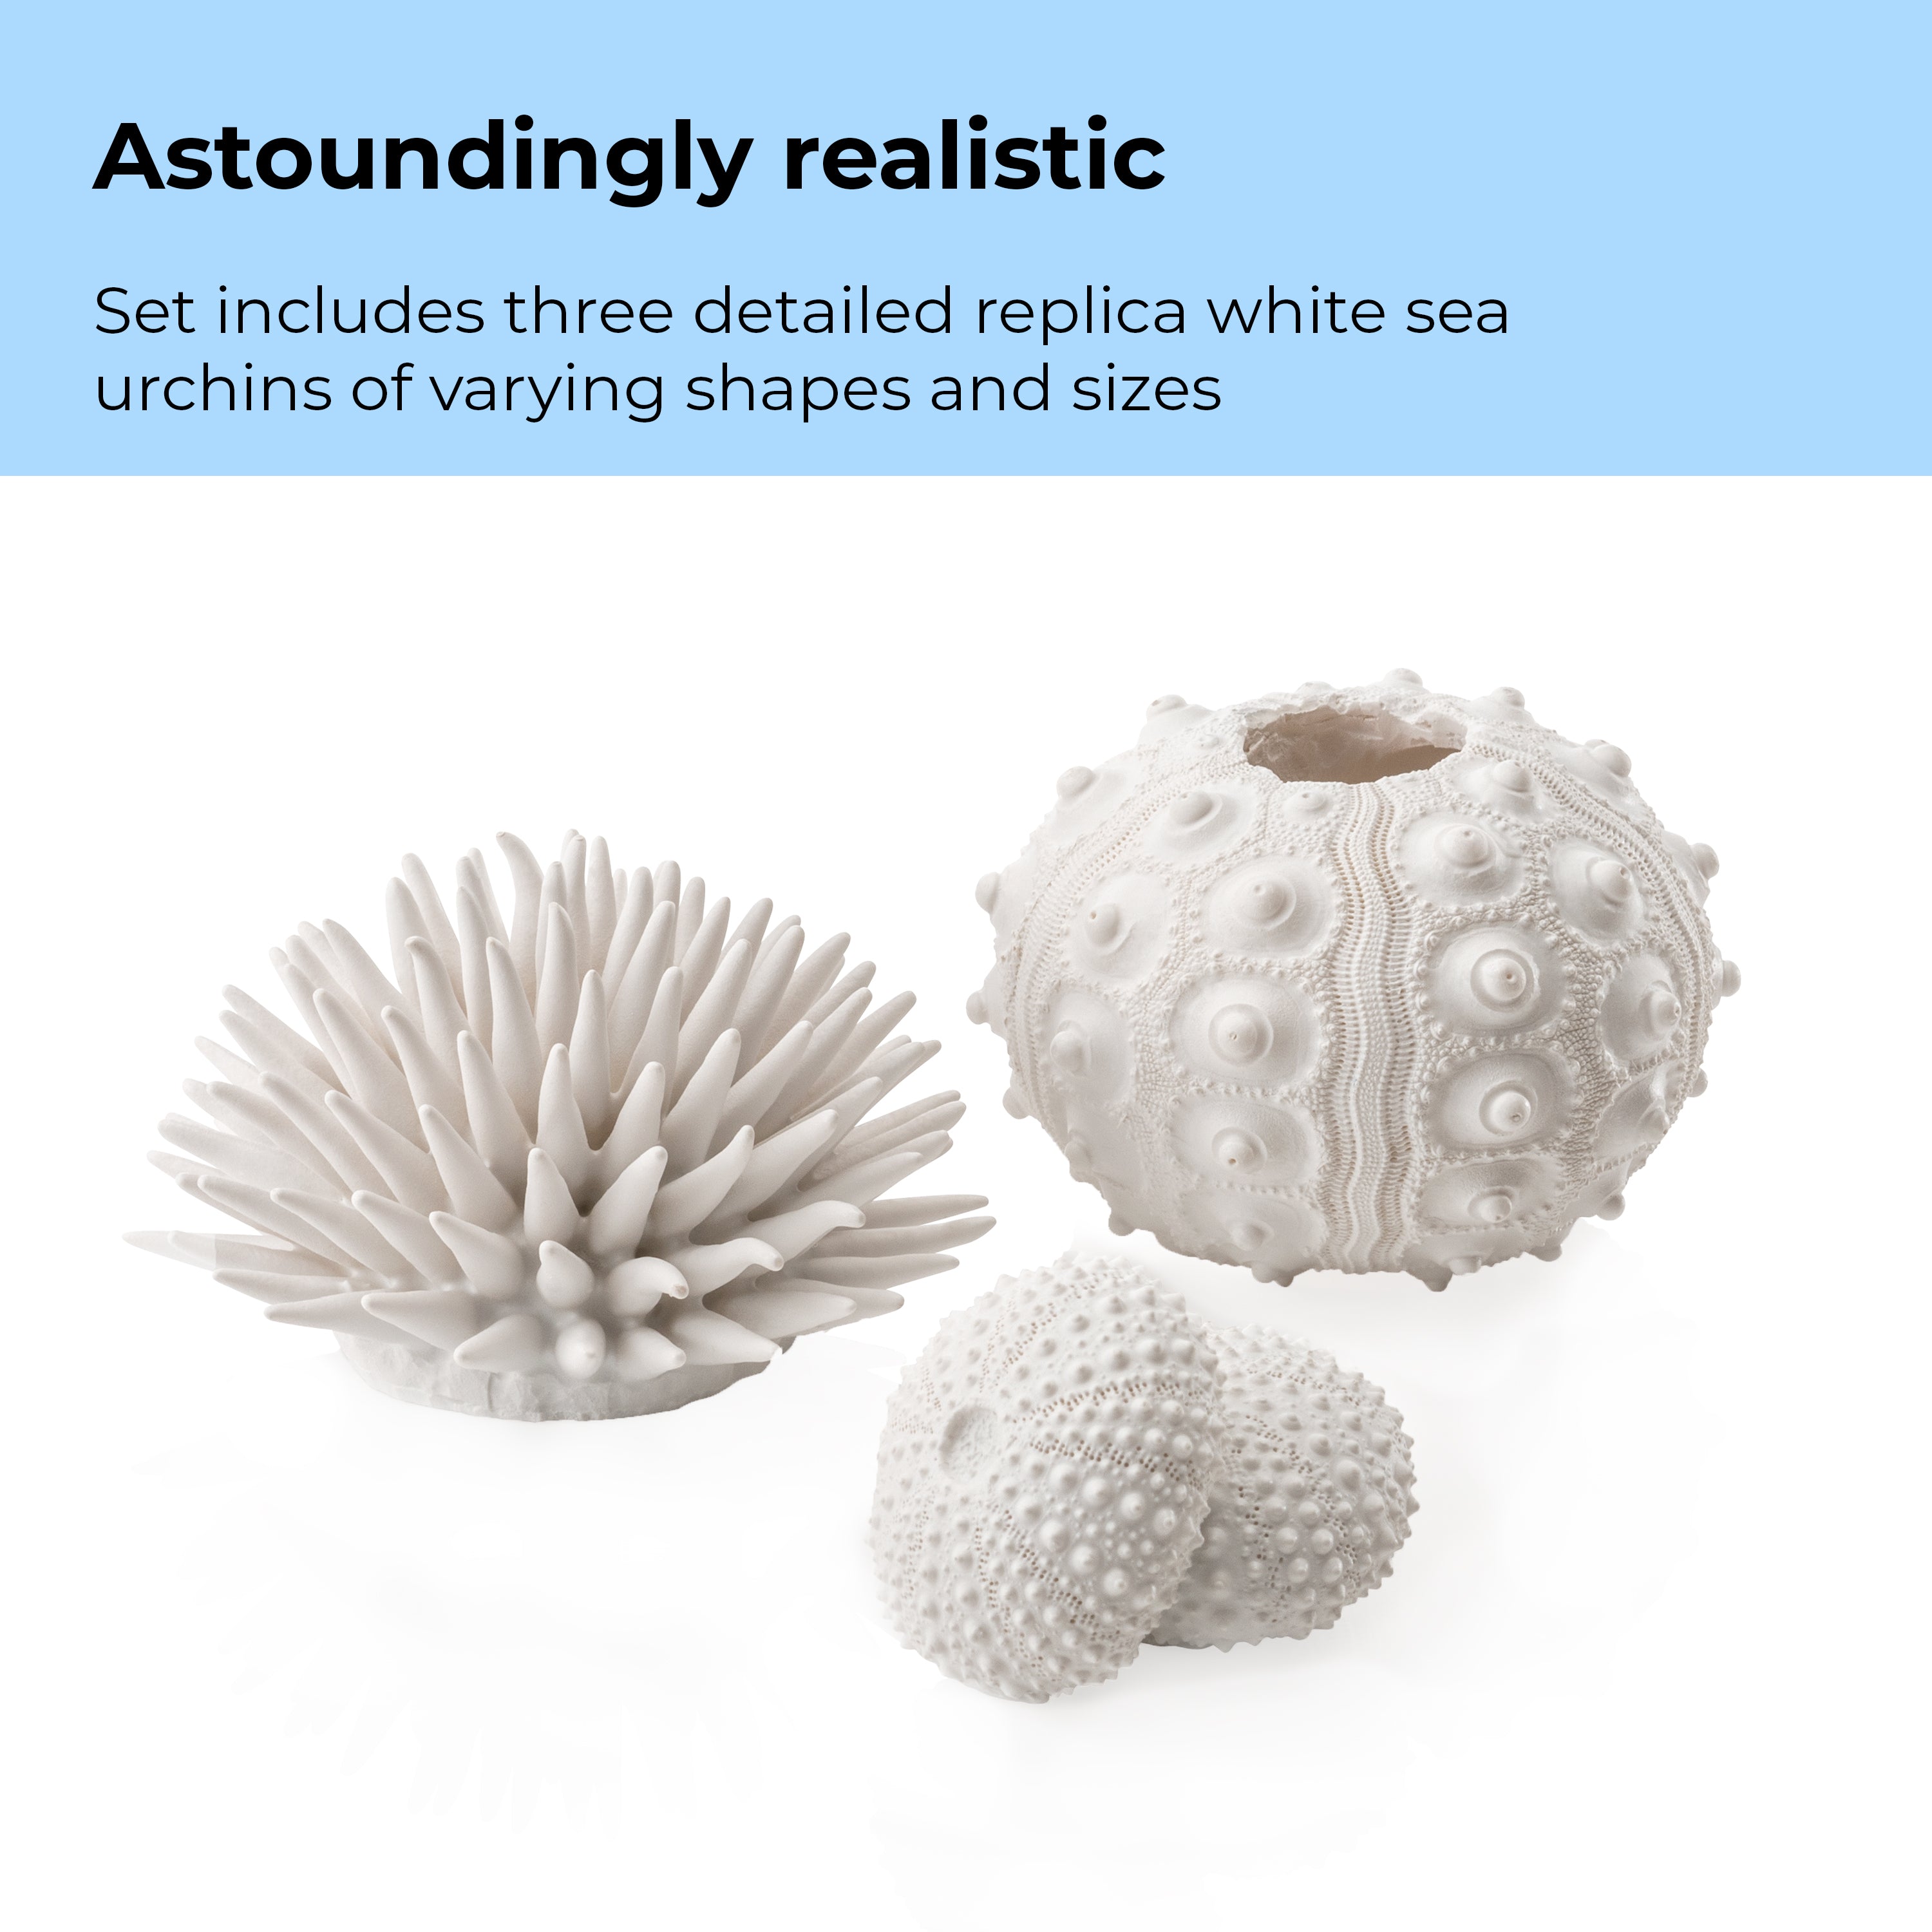 Sea Urchins Set - Astoundingly realistic